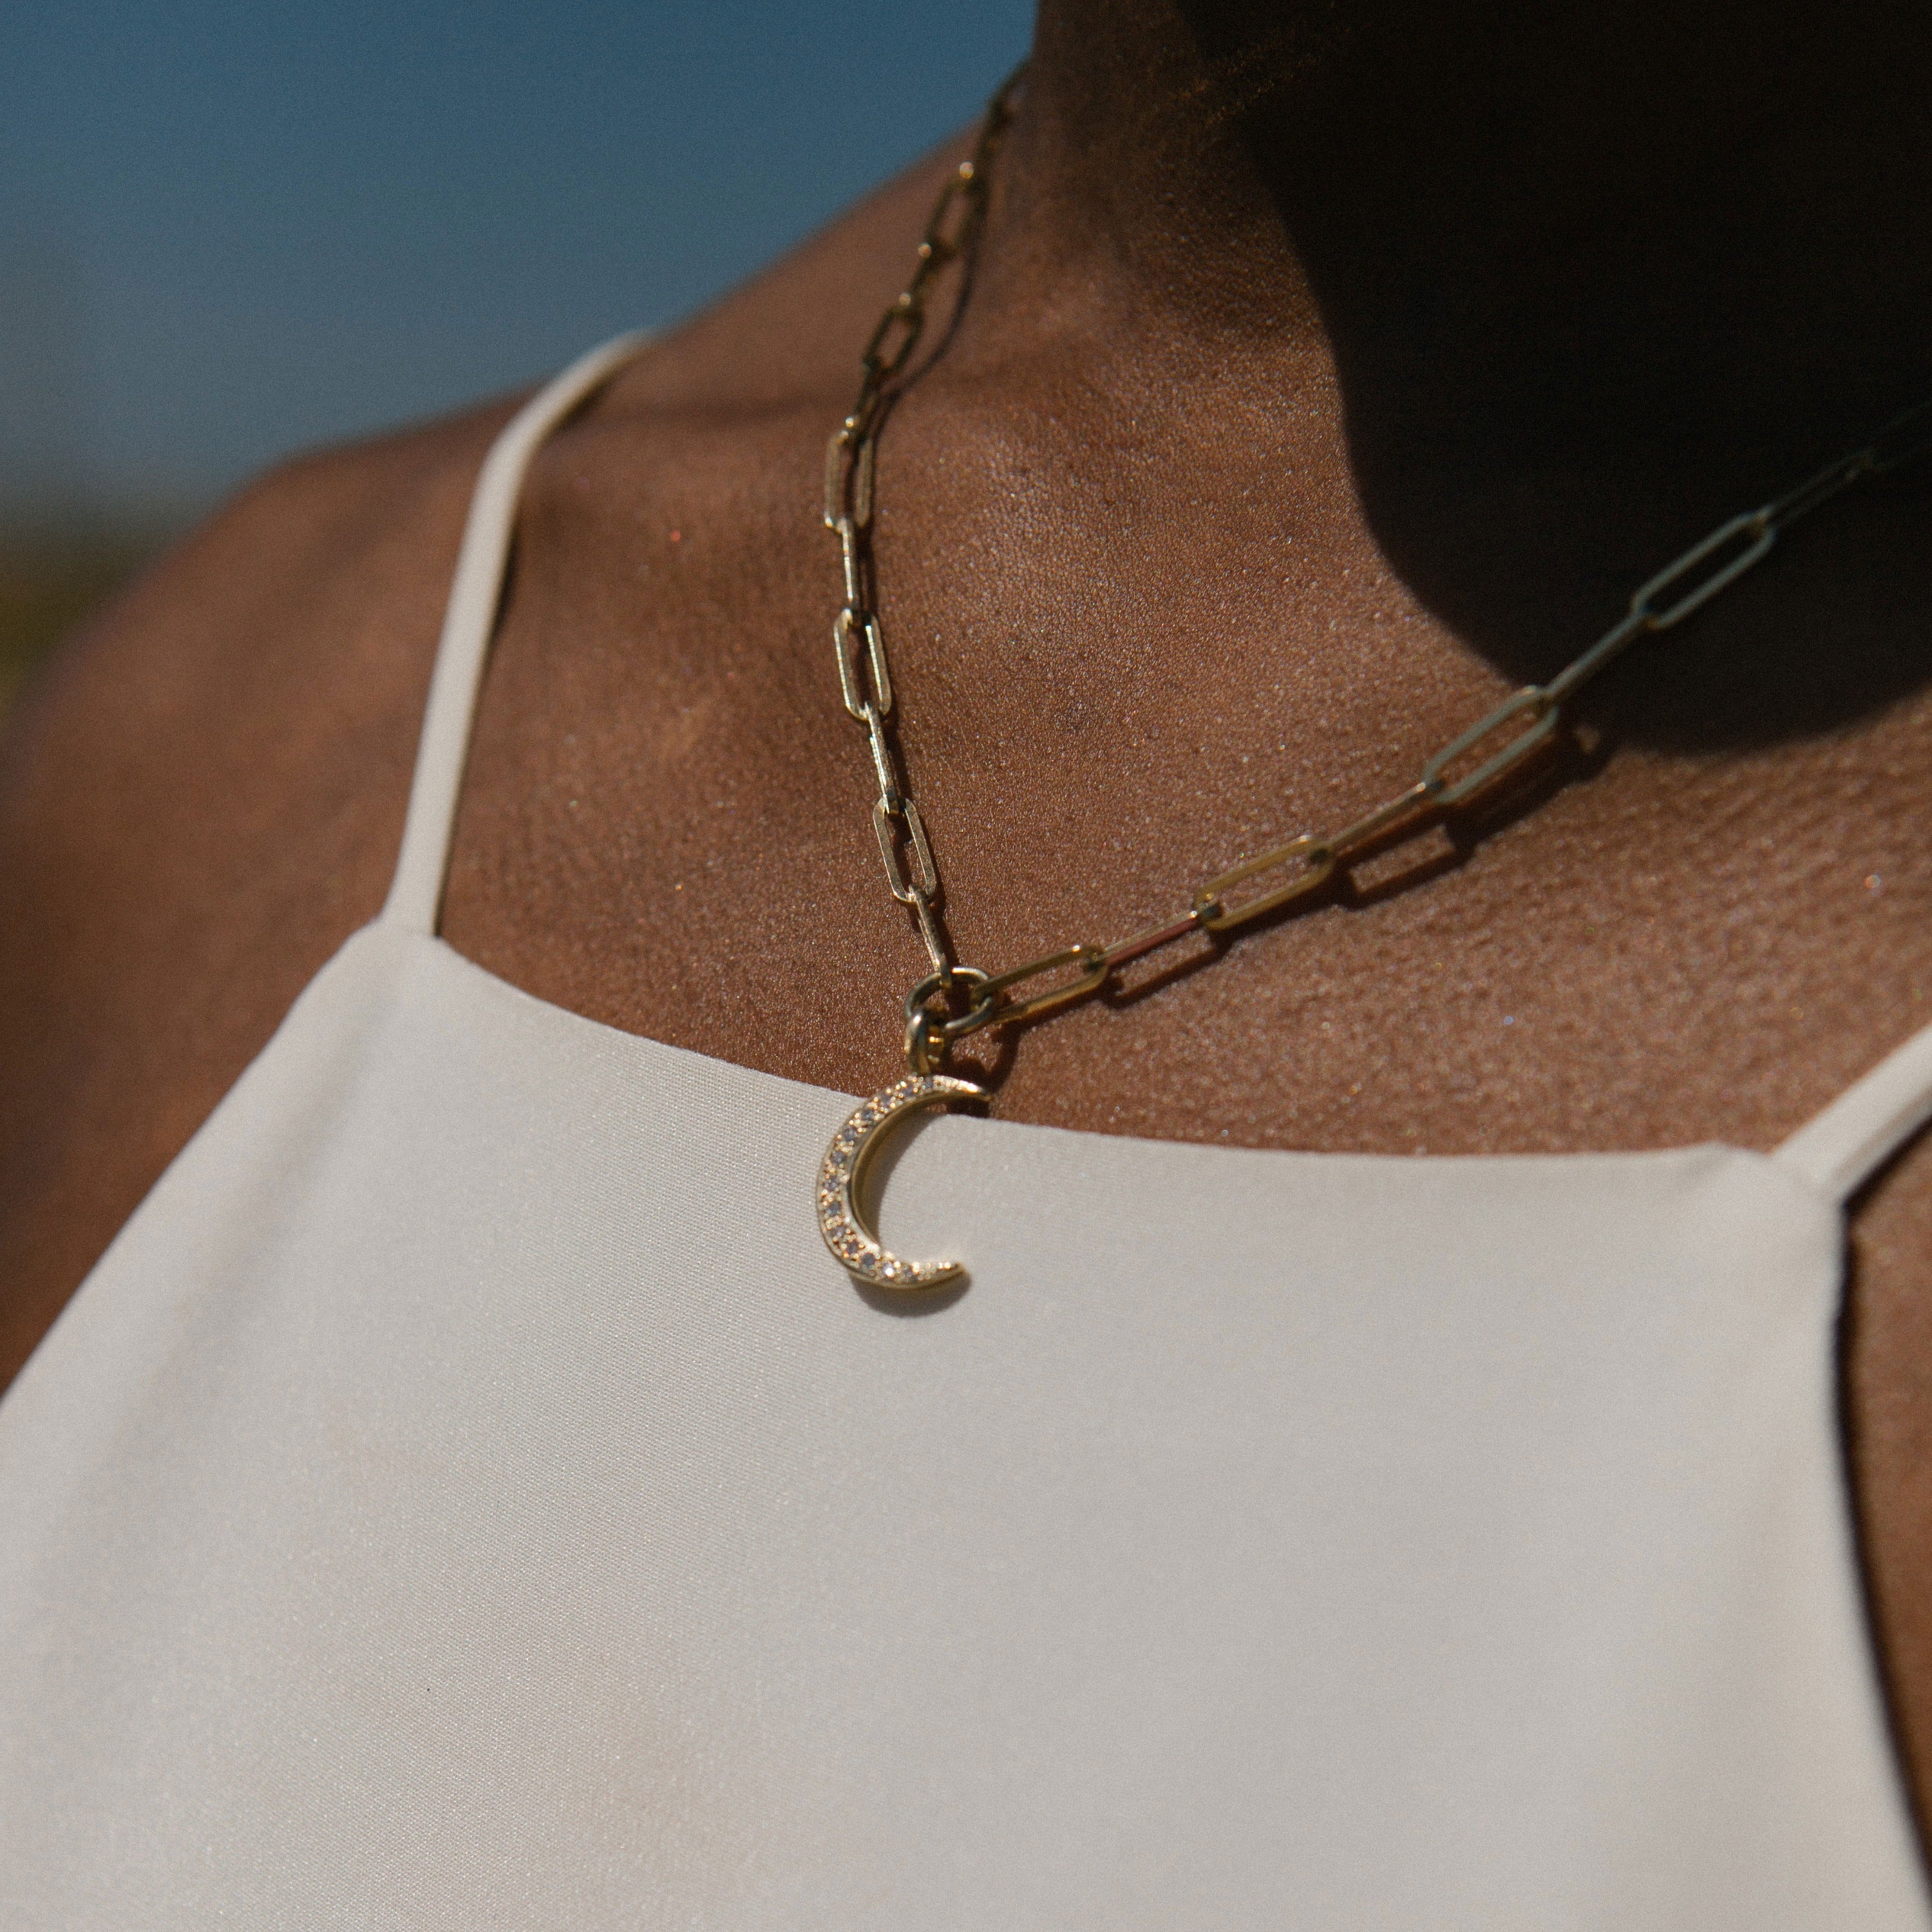 Gold Pavé Set Diamond Medium Crescent Moon Trace Chain Necklace